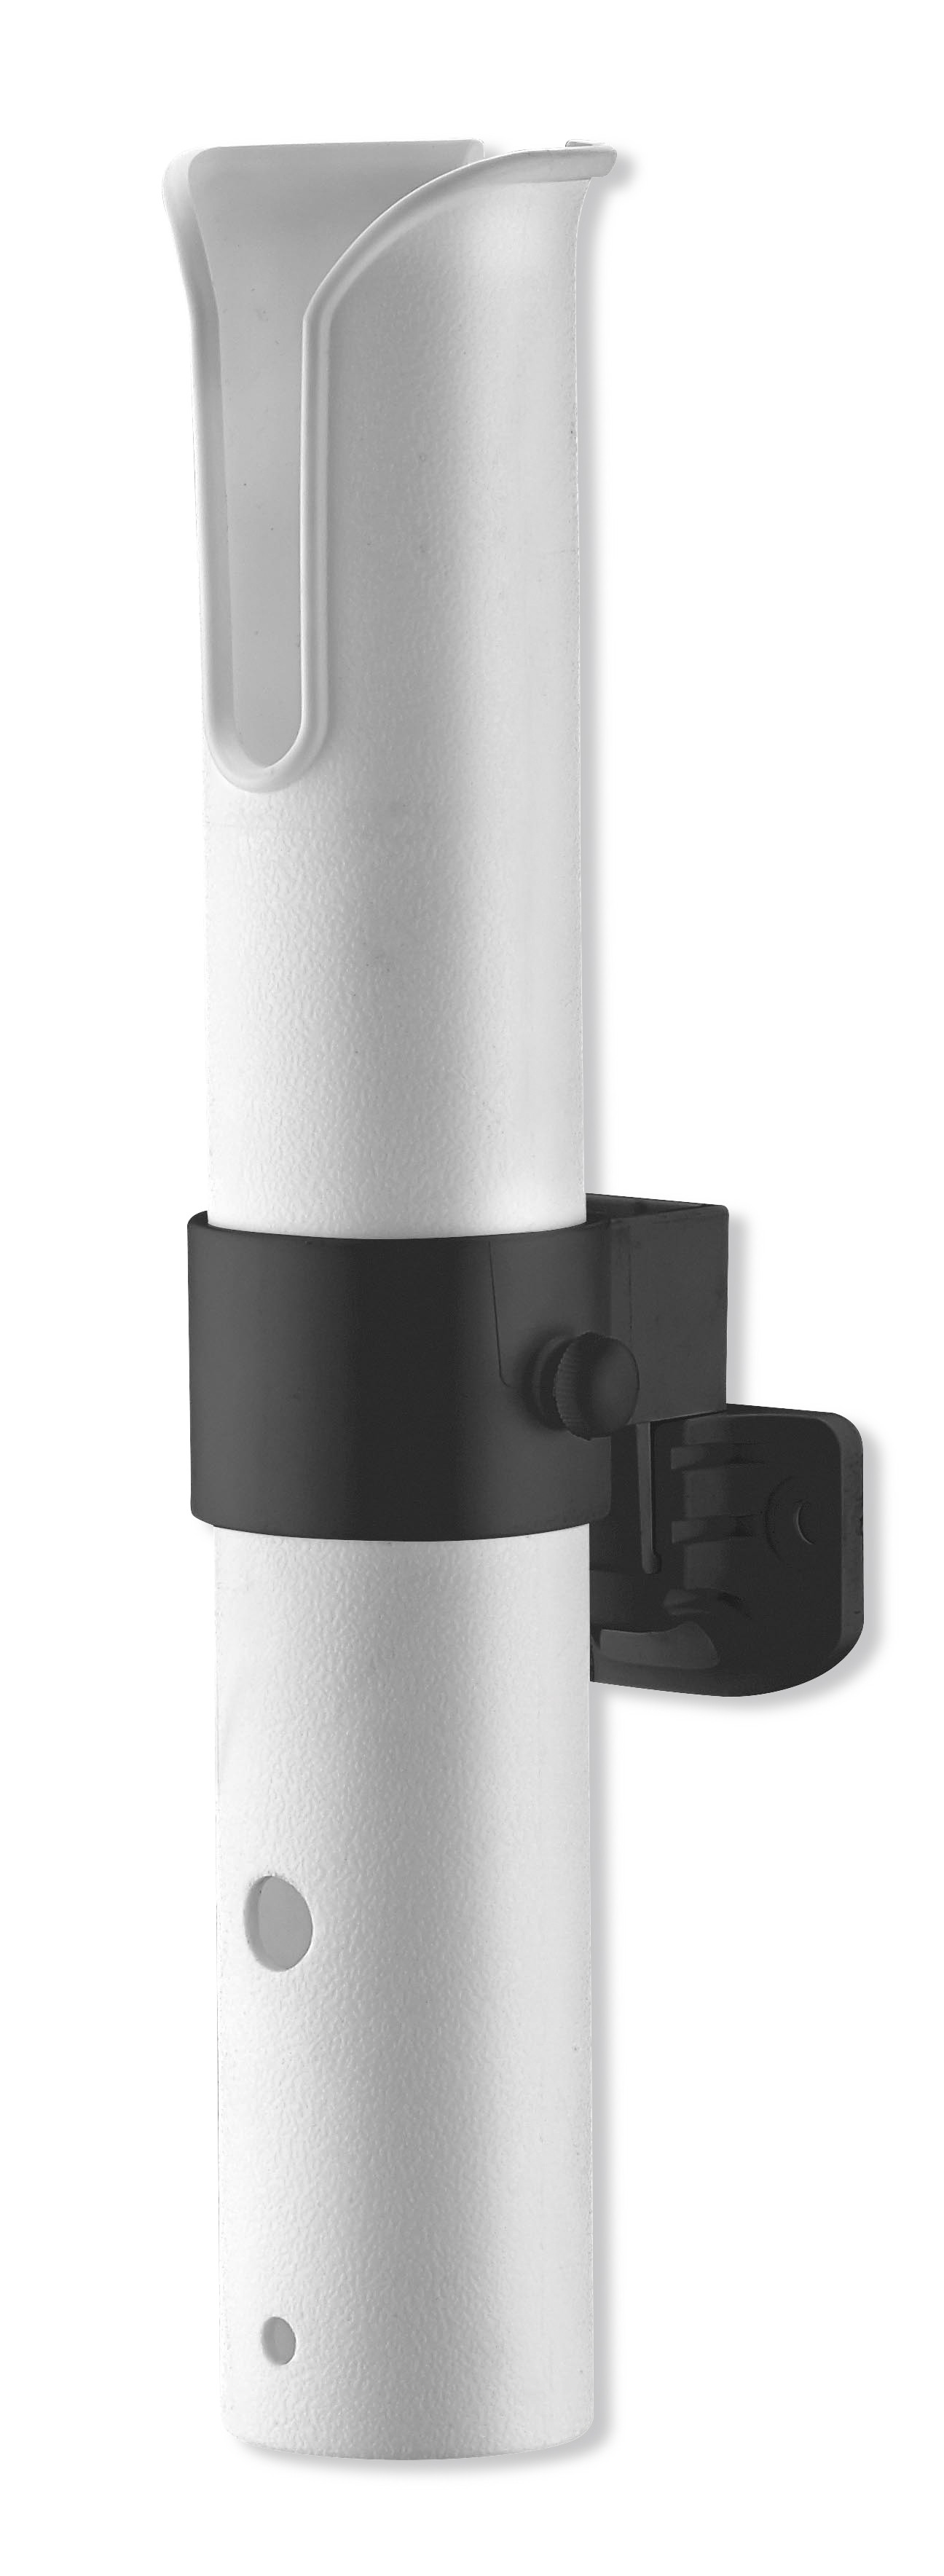 Porte-canne plastique fixation à paroi 233 mm Osculati - Porte-cann